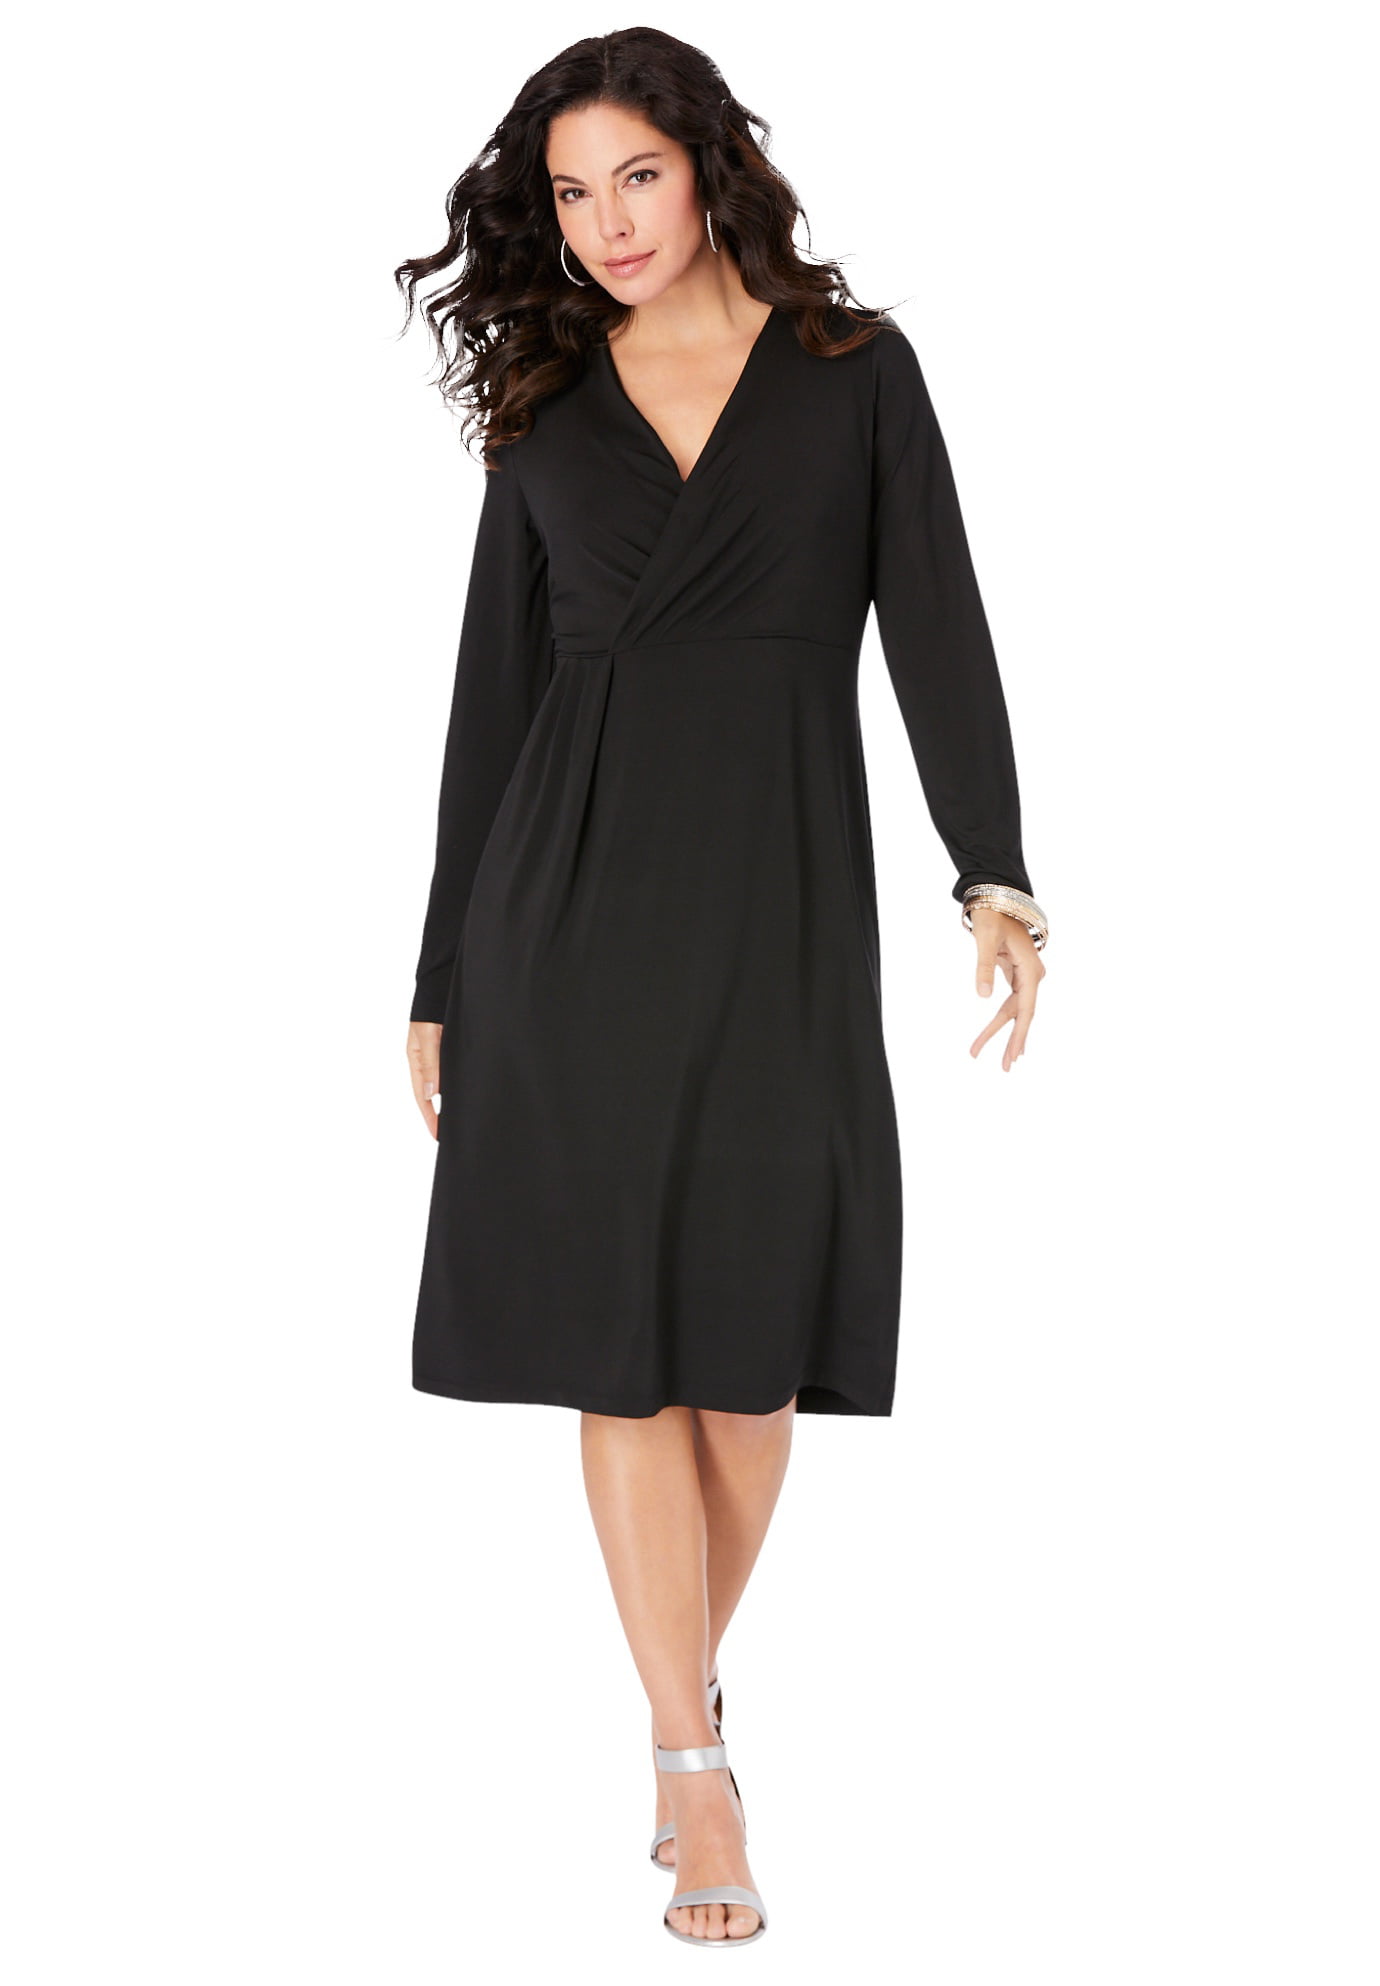 black wrap dress size 20 Big sale - OFF 79%